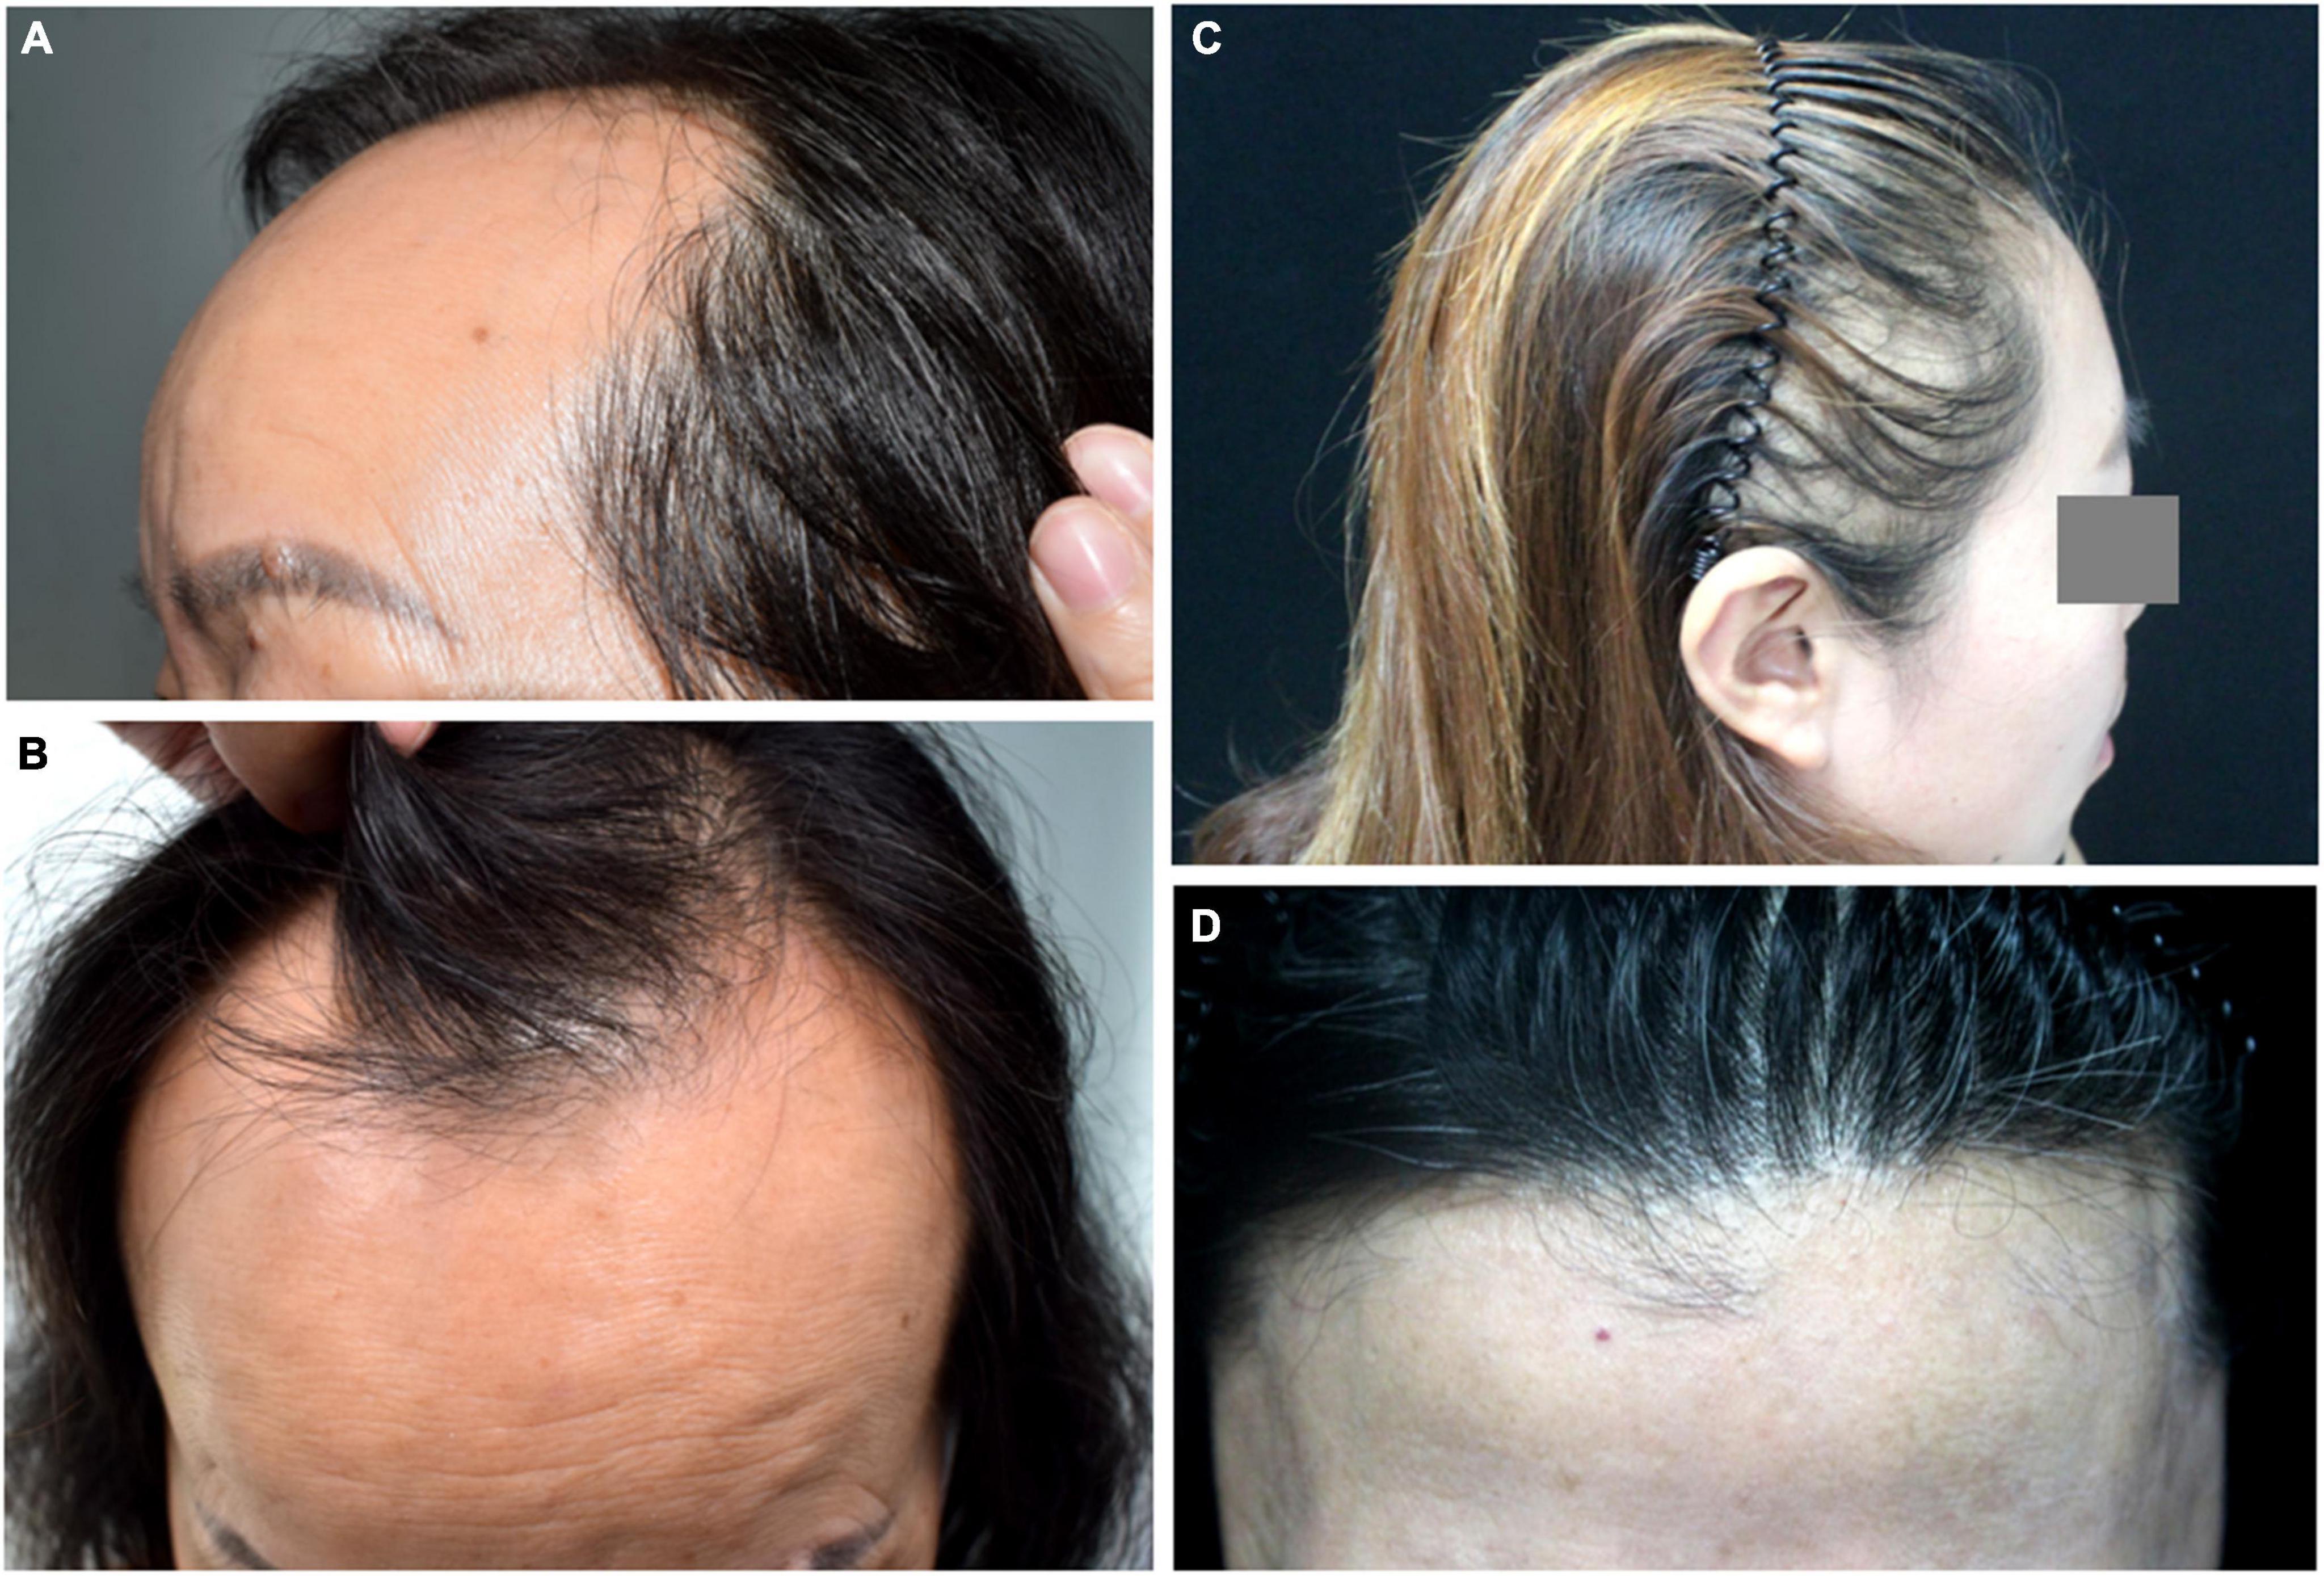 Cureus  Alopecia Areata Mimicking Frontal Fibrosing Alopecia  Article